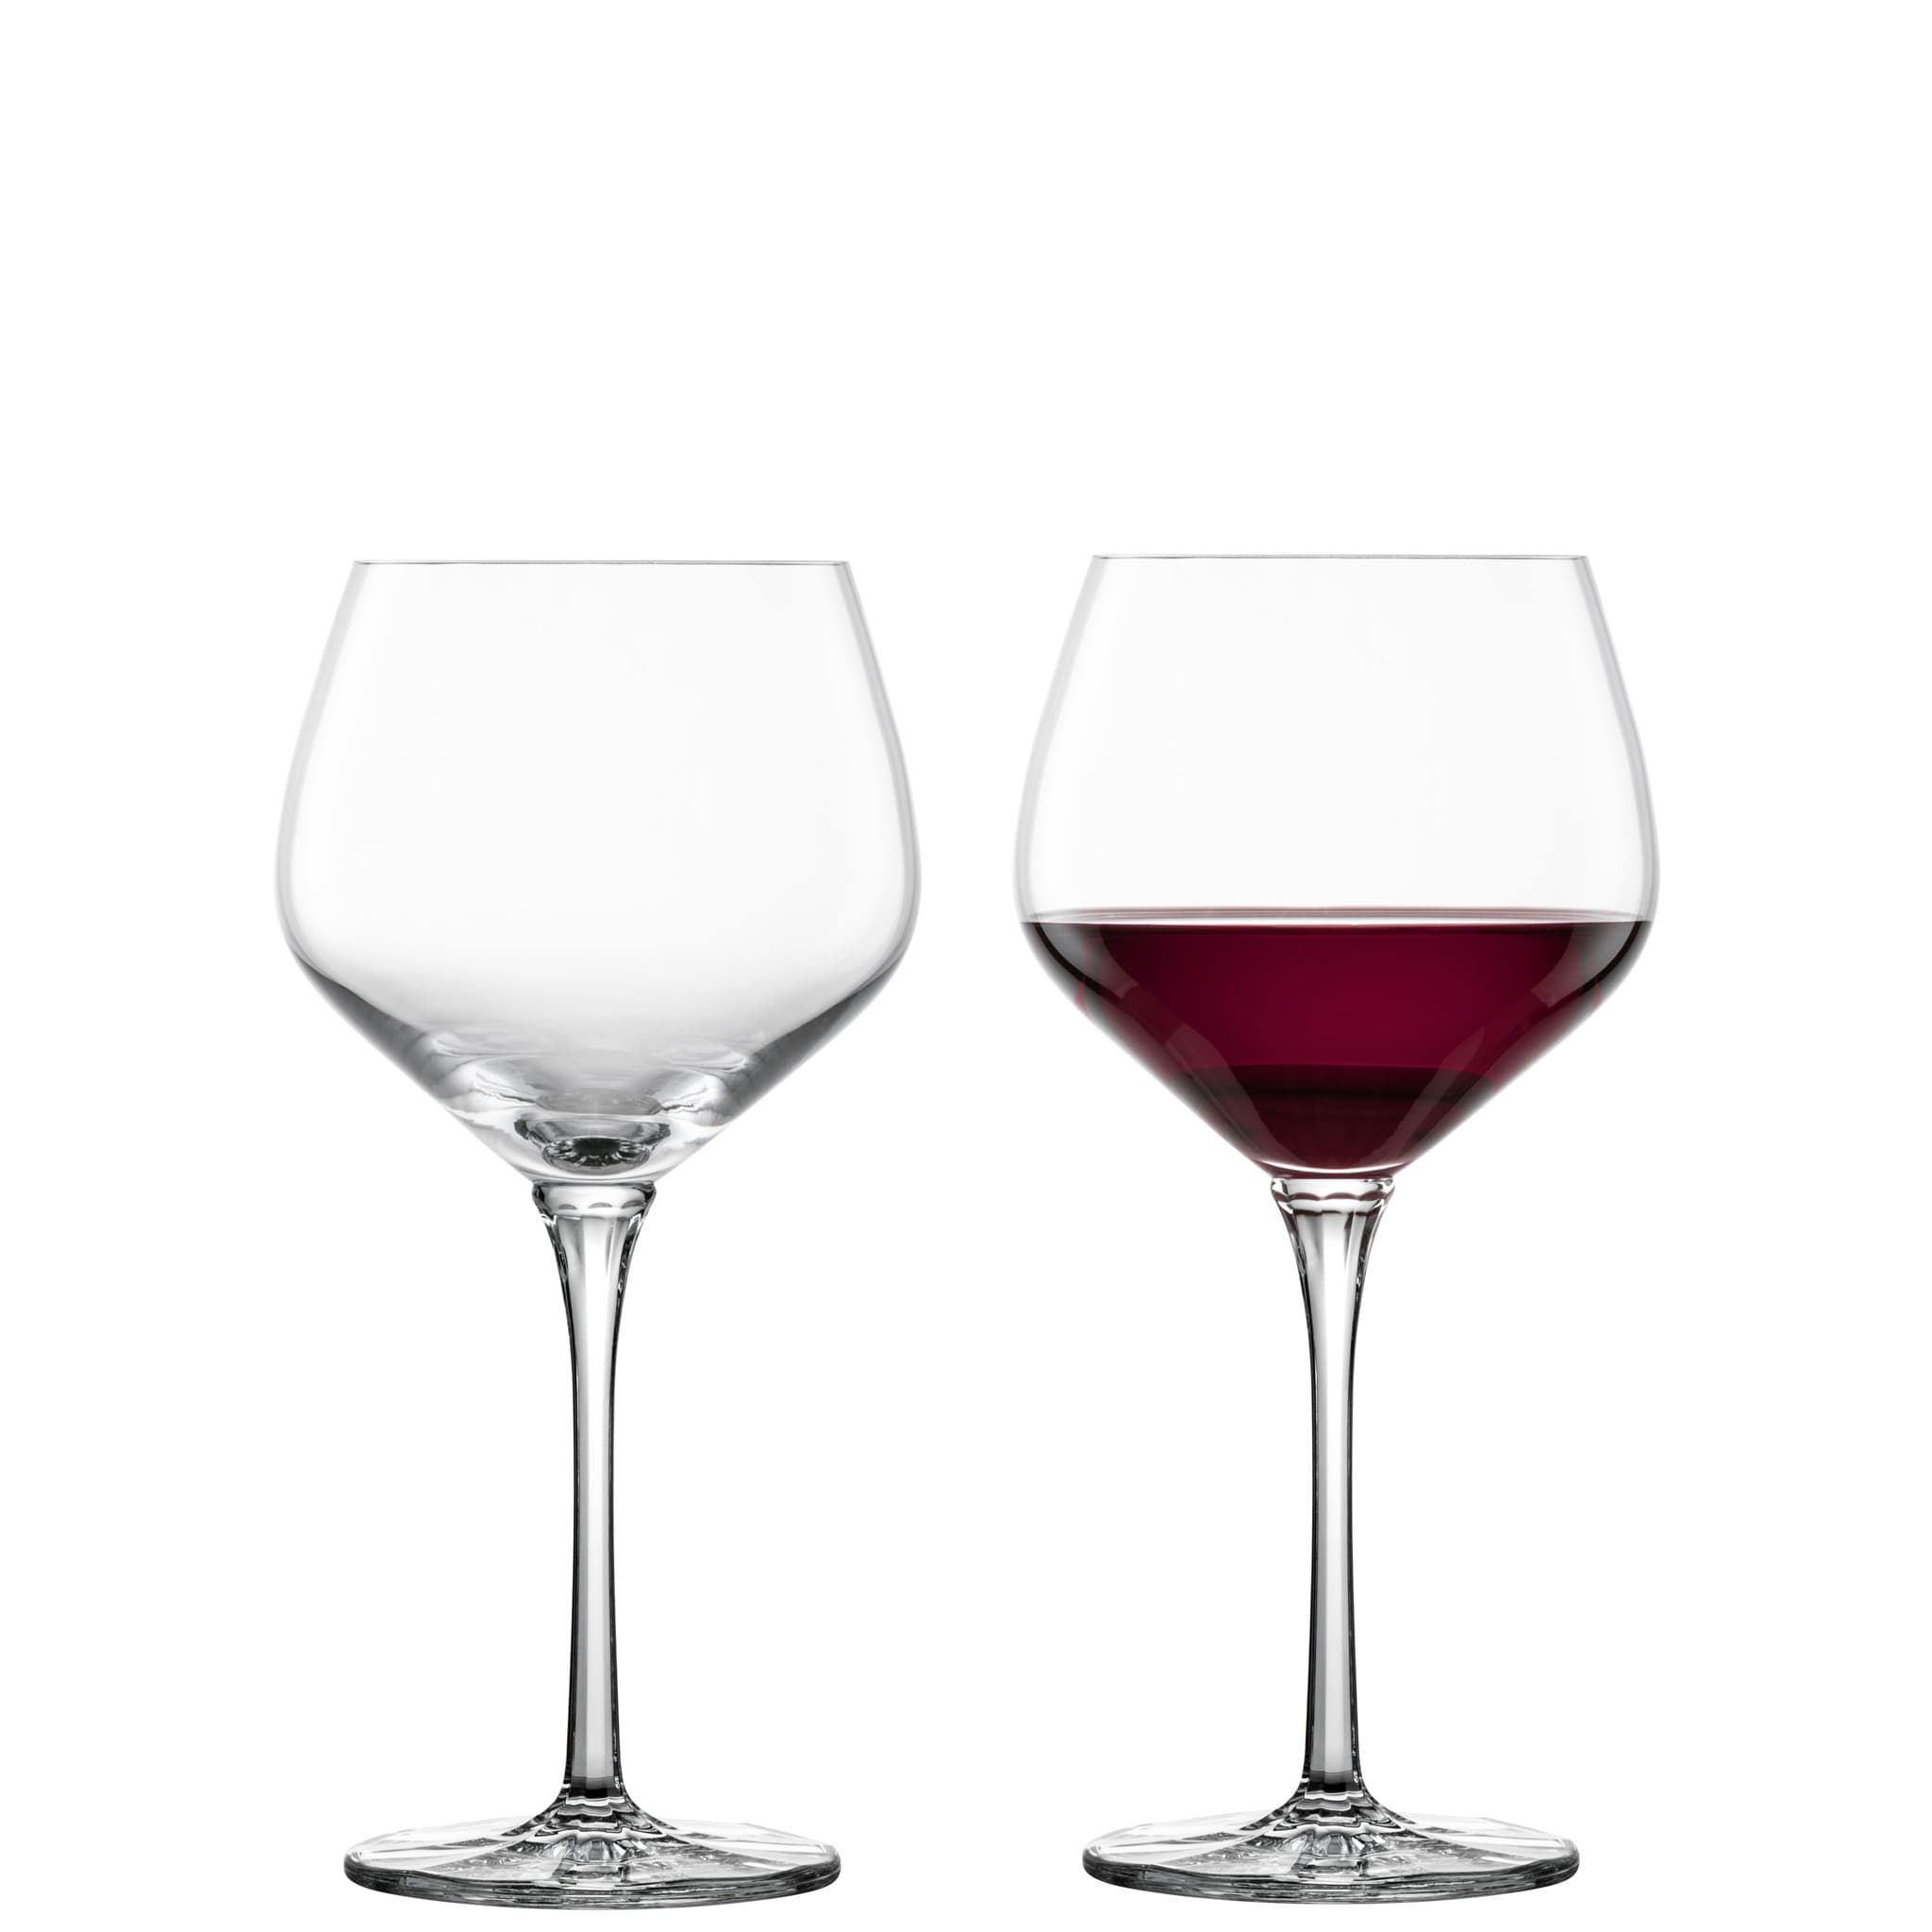 WINEX/HTT グランブルゴーニュS  ワイングラス　2個